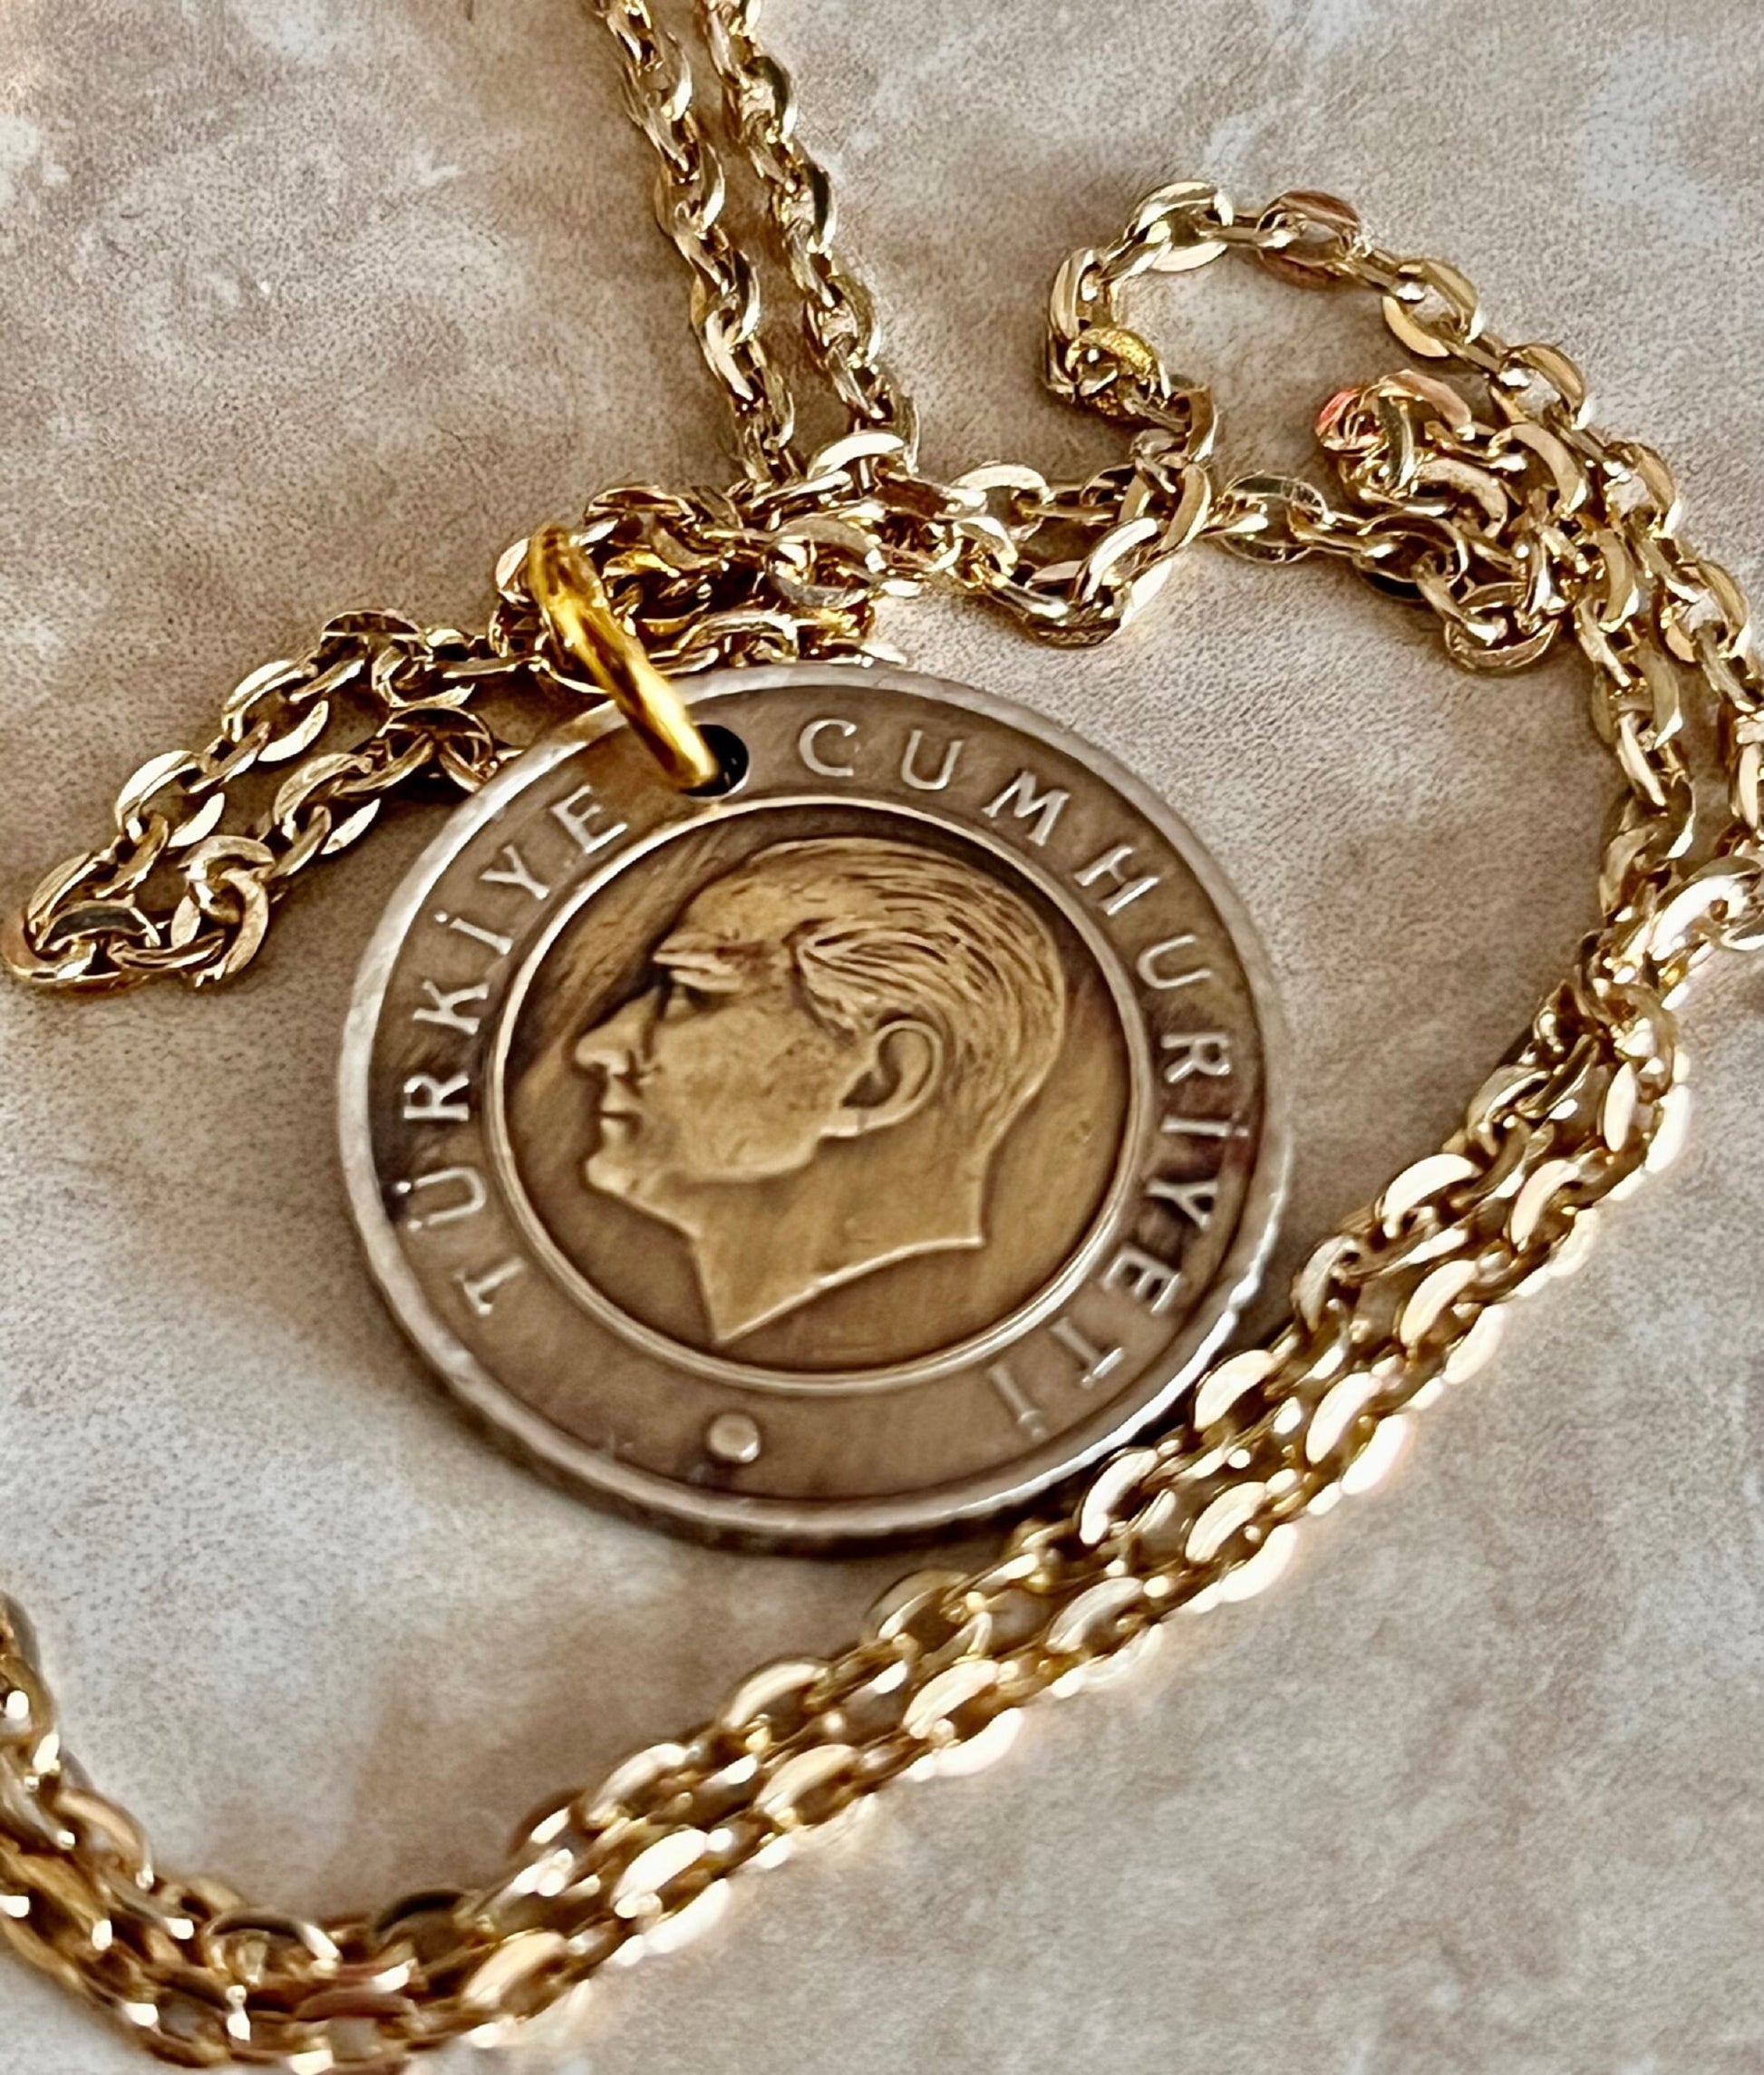 Turkey Coin Necklace Turkish 1 Lirasi Turkiye Cumhuriyeti Personal Handmade Jewelry Gift Friend Charm For Him Her World Coin Collector